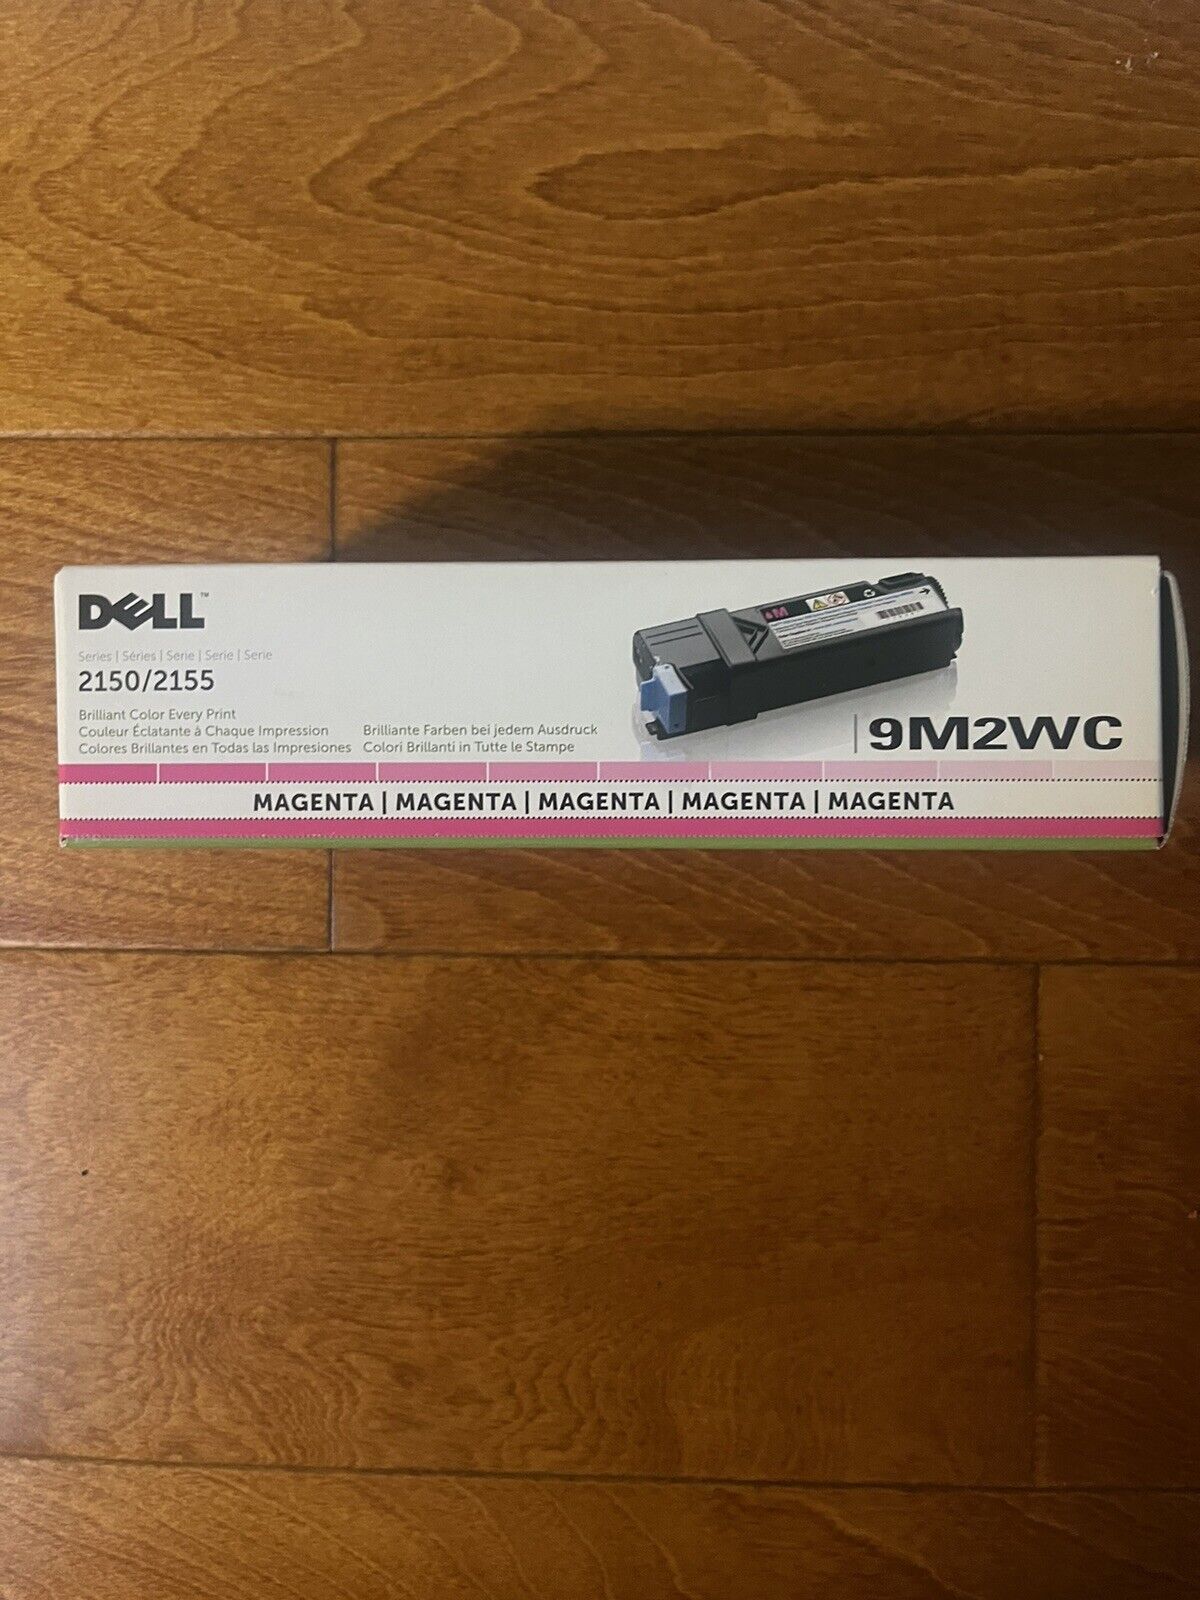 New  Genuine Dell 9M2WC Toner Cartridge Magenta Series 2150/2155